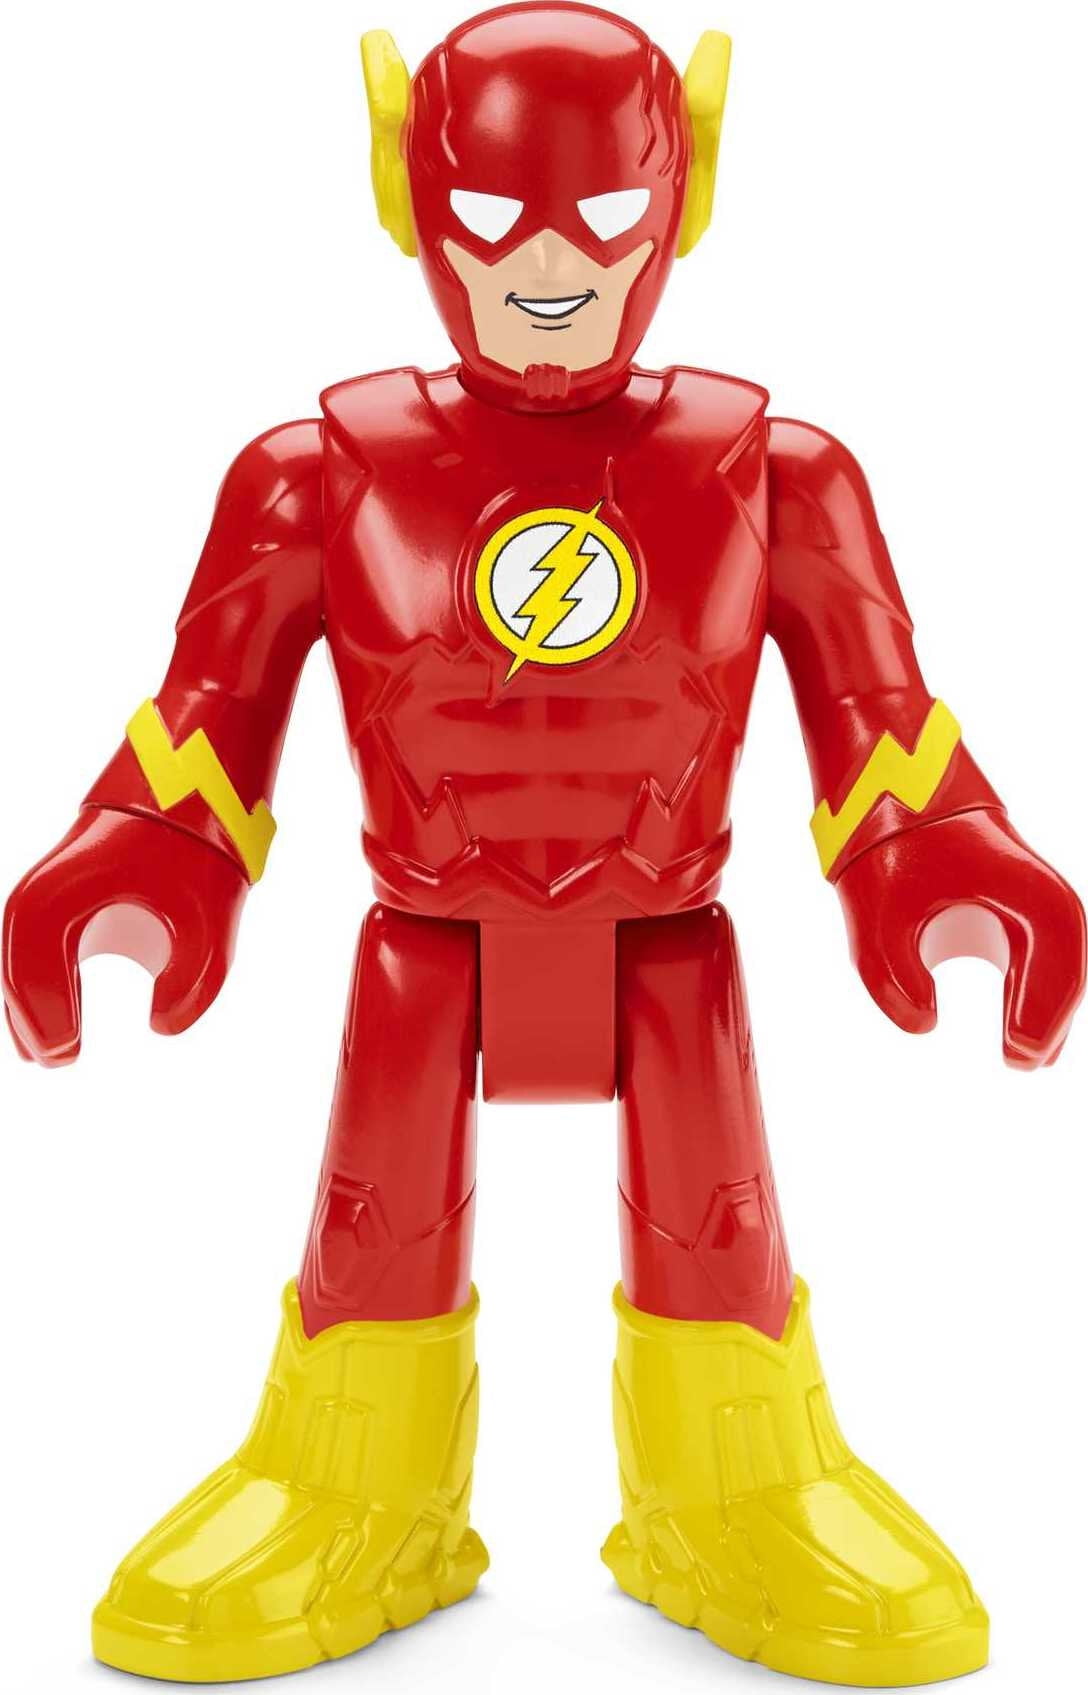 Imaginext DC Super Friends The Flash XL 10-Inch Poseable Figure for Preschool Kids